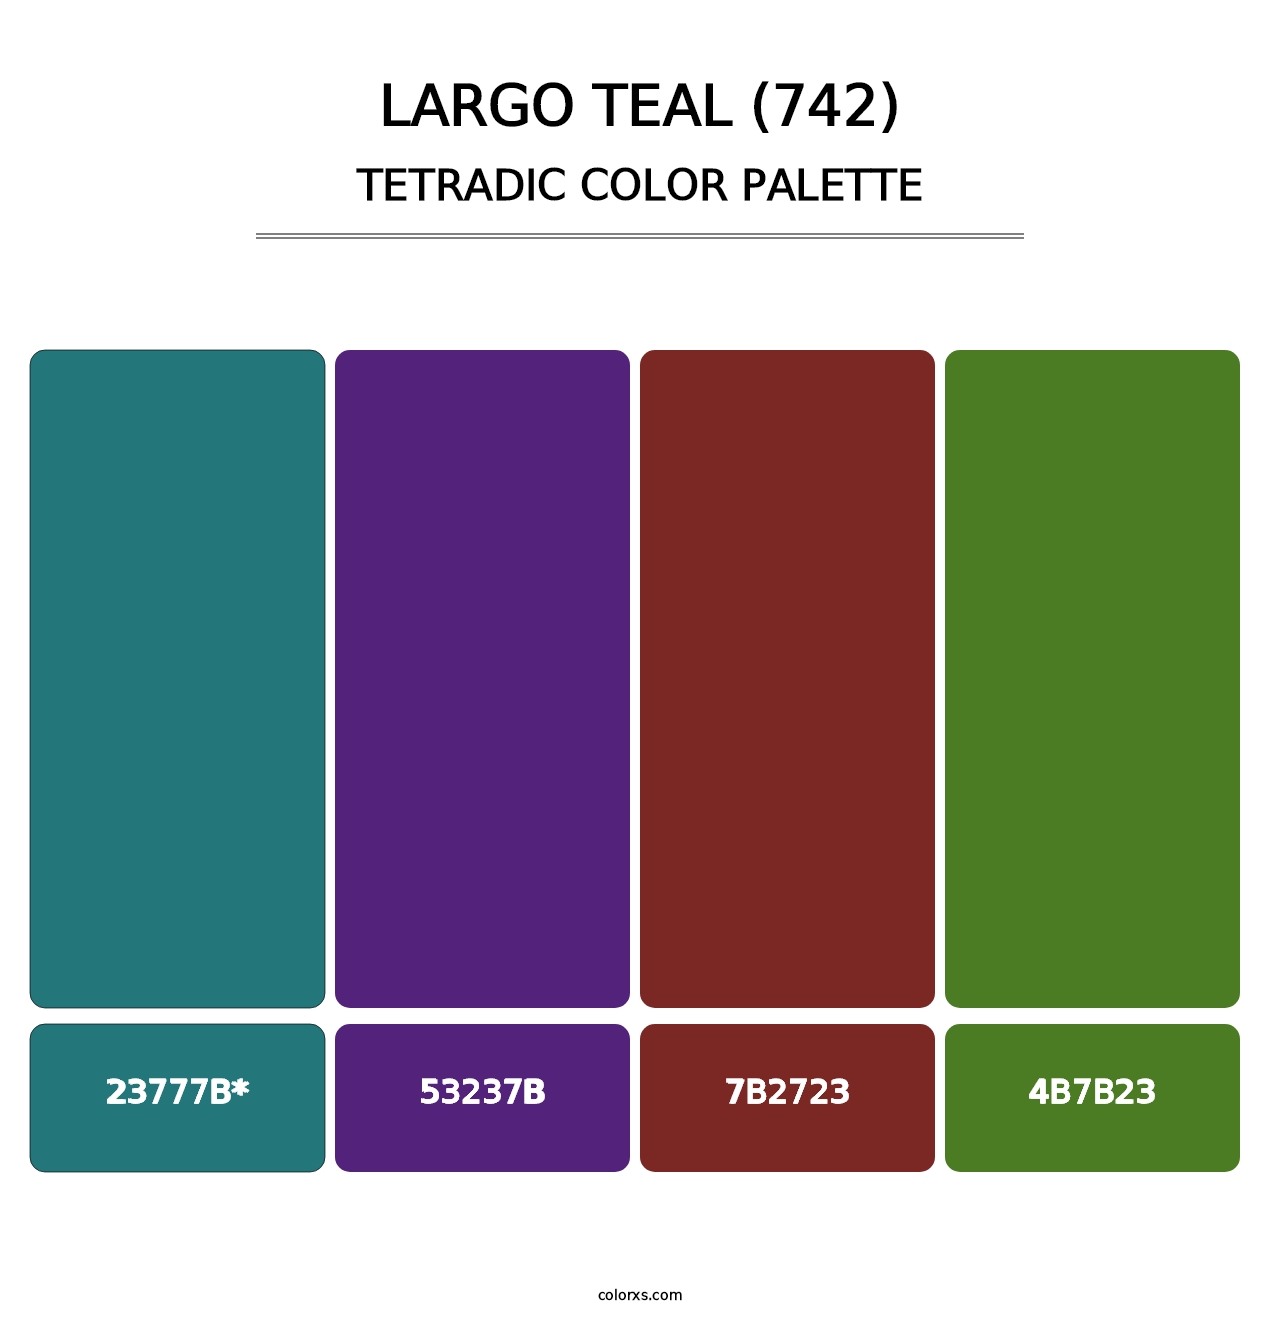 Largo Teal (742) - Tetradic Color Palette